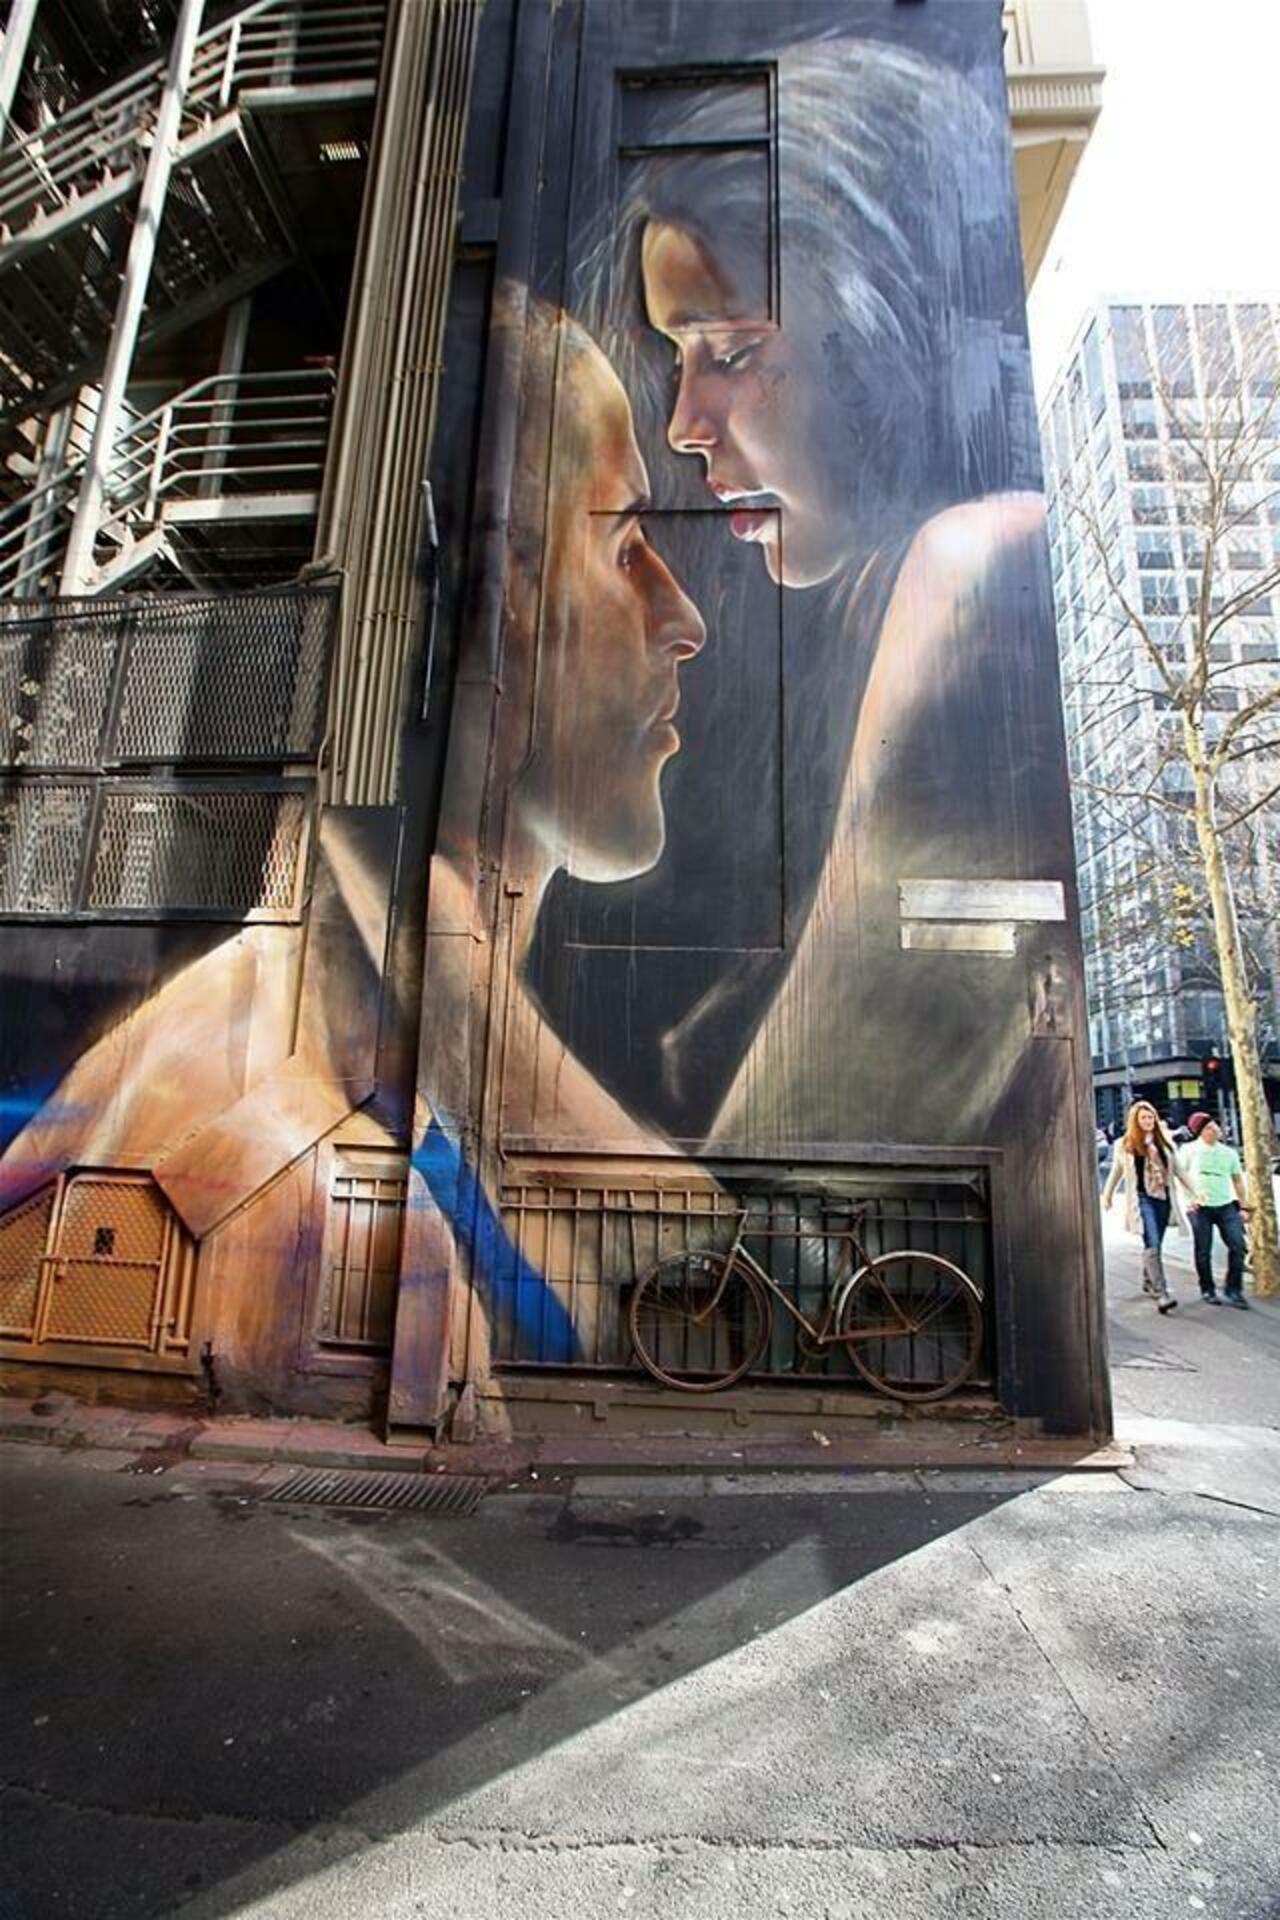 Matt Adnate & Vincent Fantauzzo new beautiful Street Art piece in Melbourne, Australia #art #mural #streetart http://t.co/SytO6SLeaL